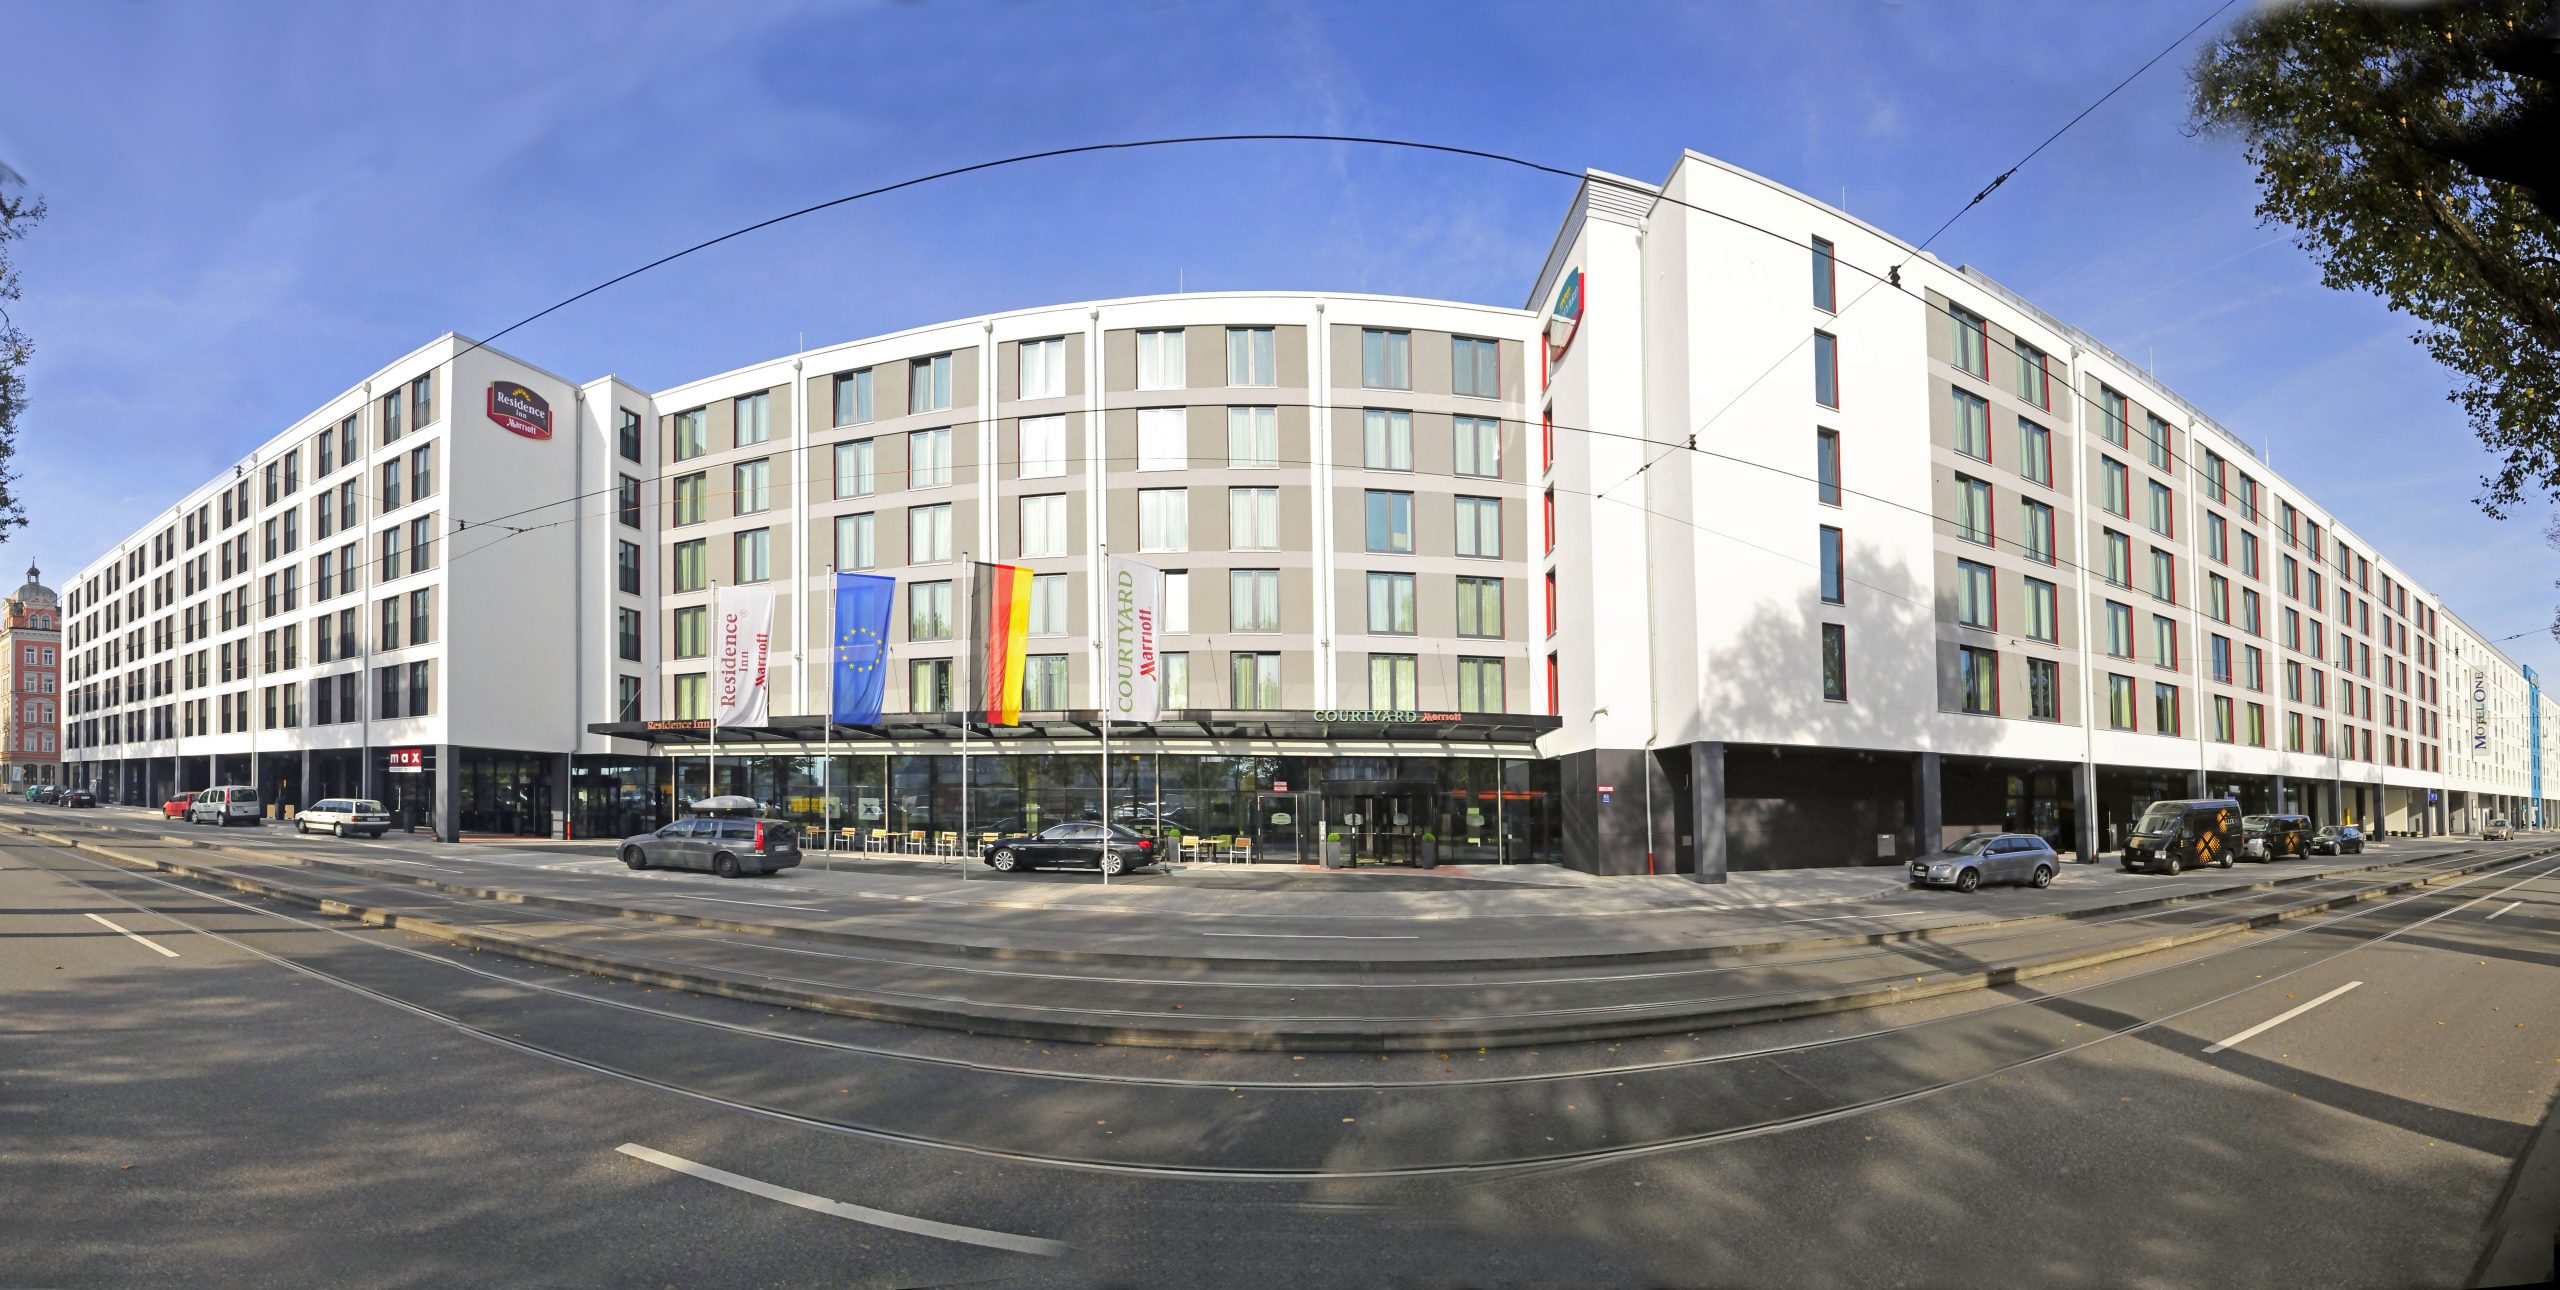 Marriott-Hotel-Fassade-VS-5-scaled